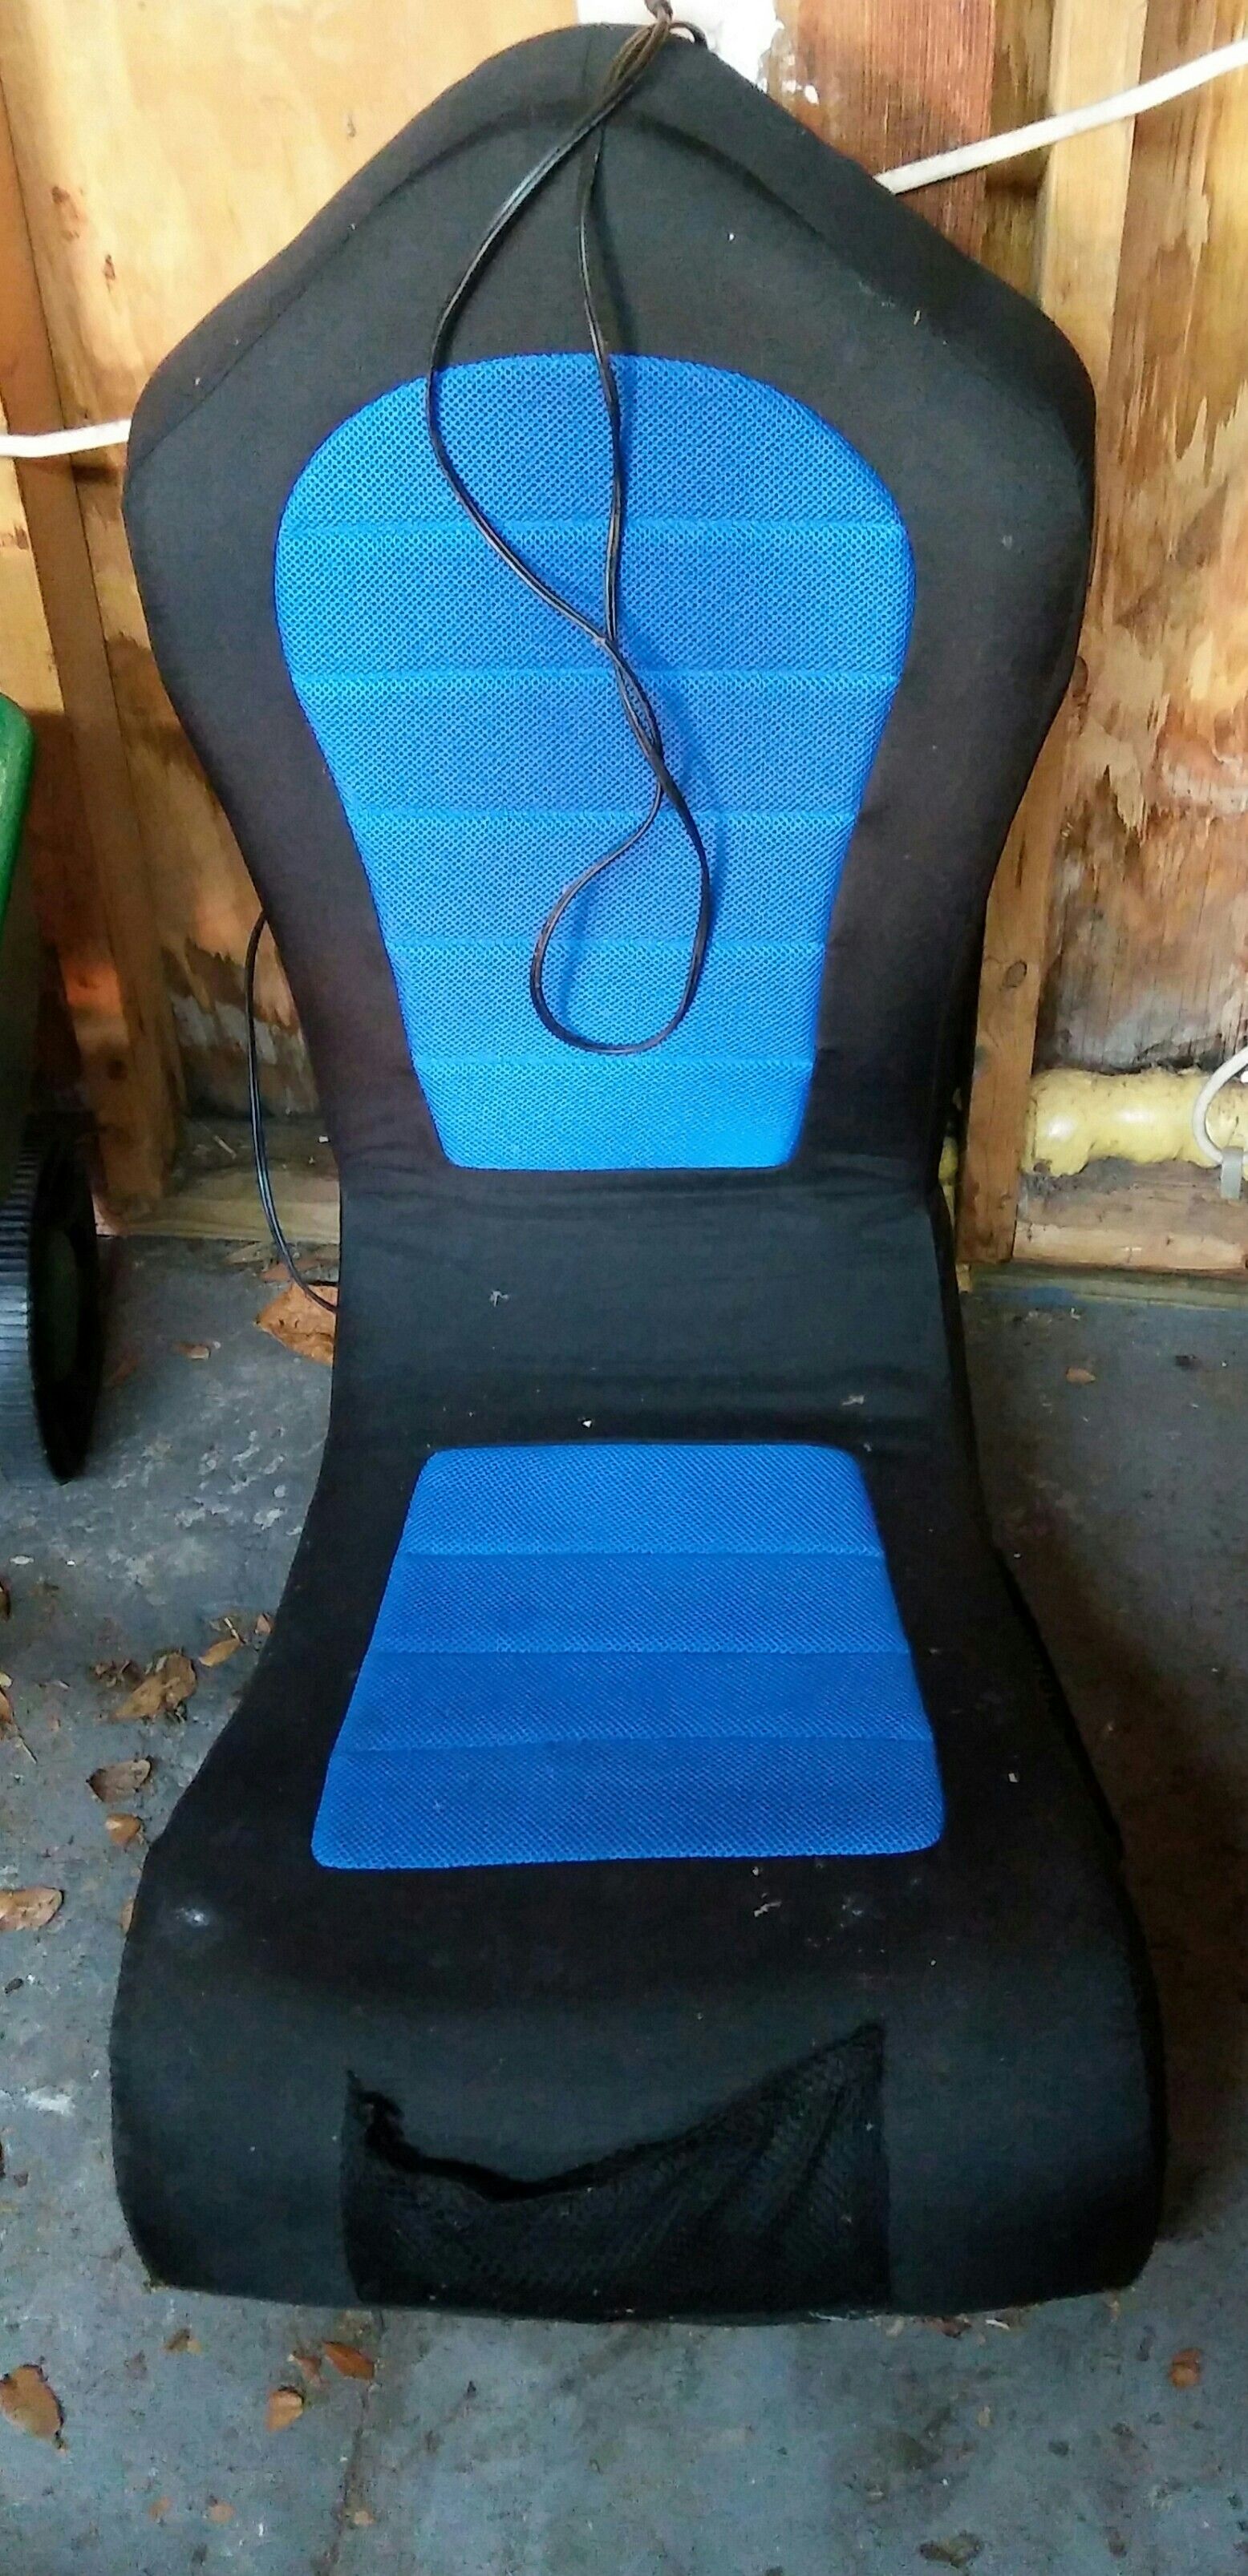 Video Gamer chair